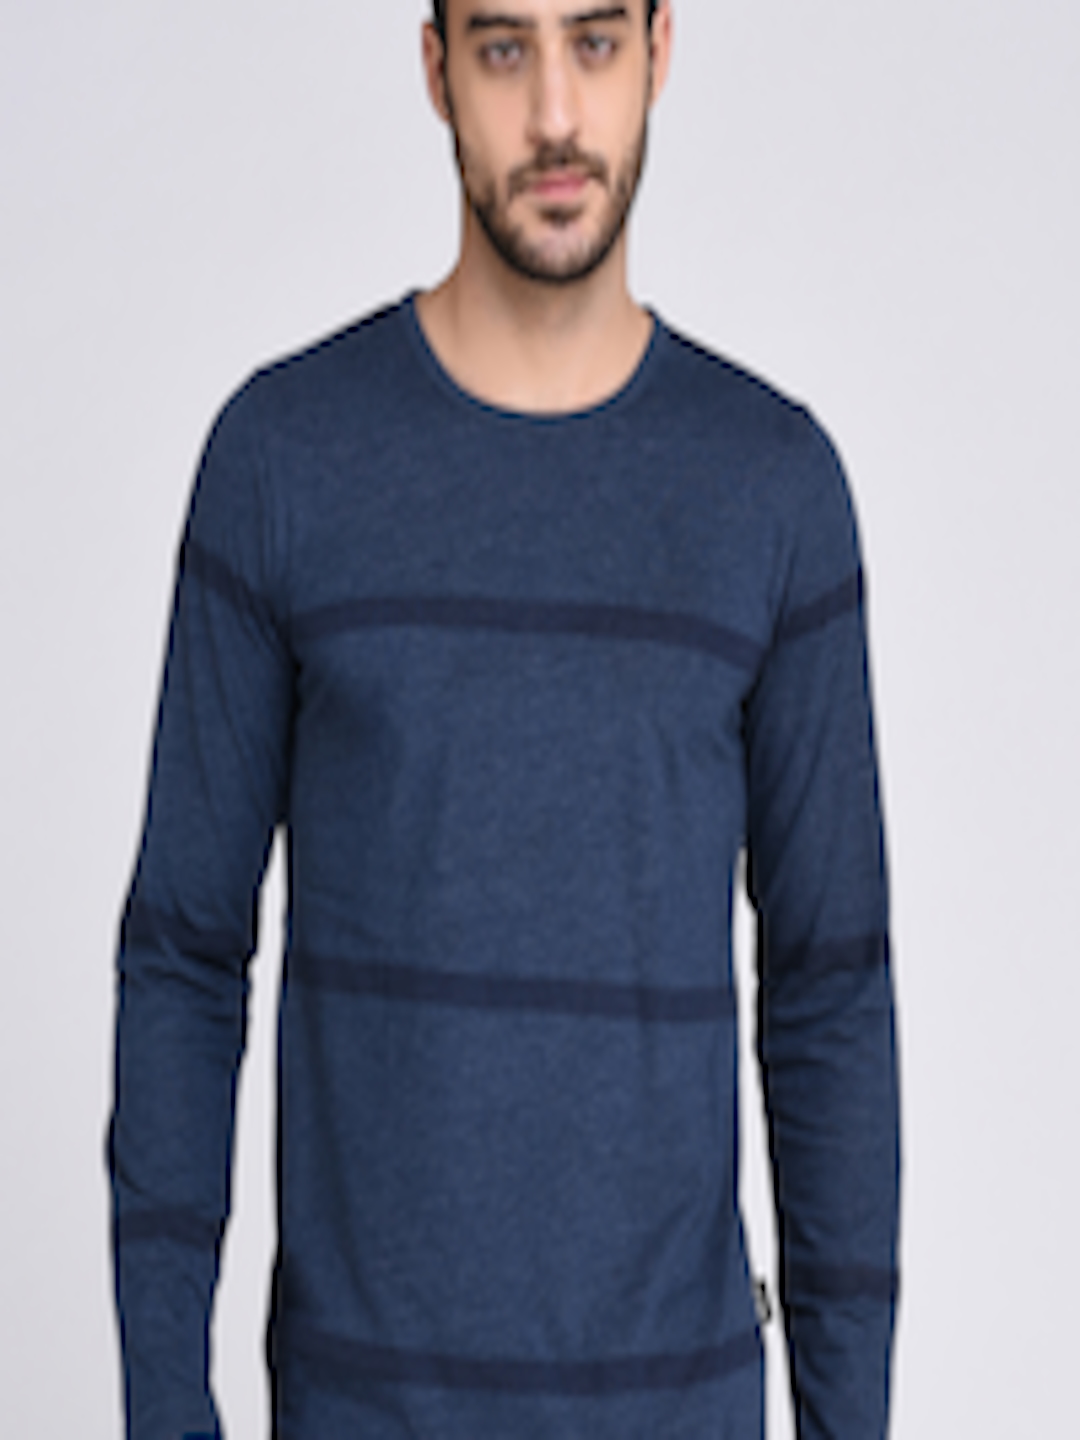 Buy Rigo Men Blue Striped Round Neck T Shirt - Tshirts for Men 7480556 ...